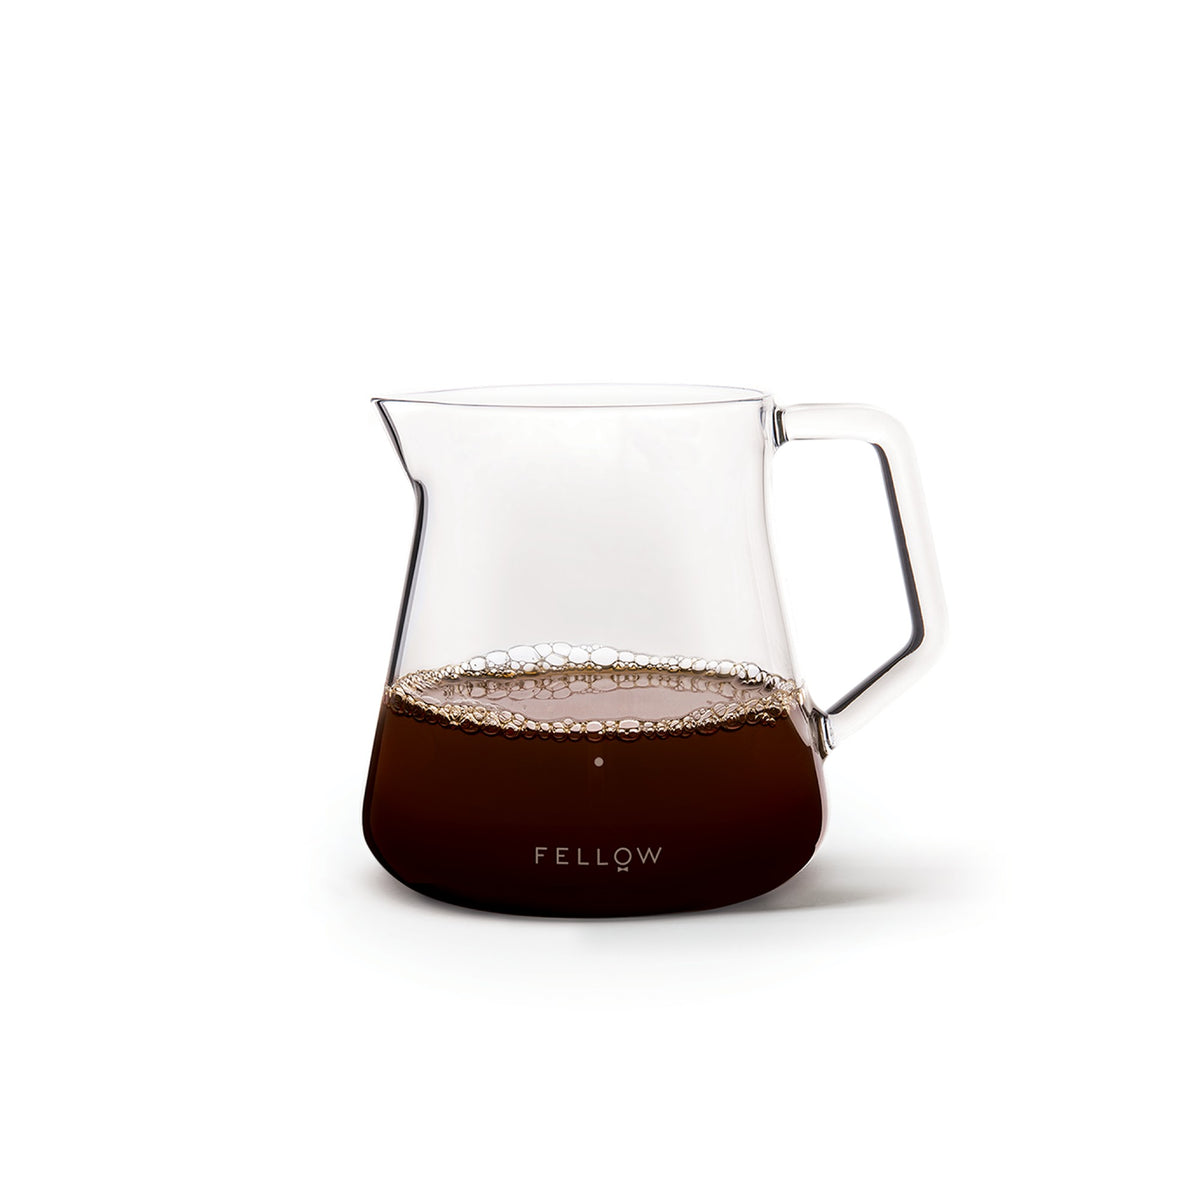 Hario glass carafe - Cottonwood Coffee